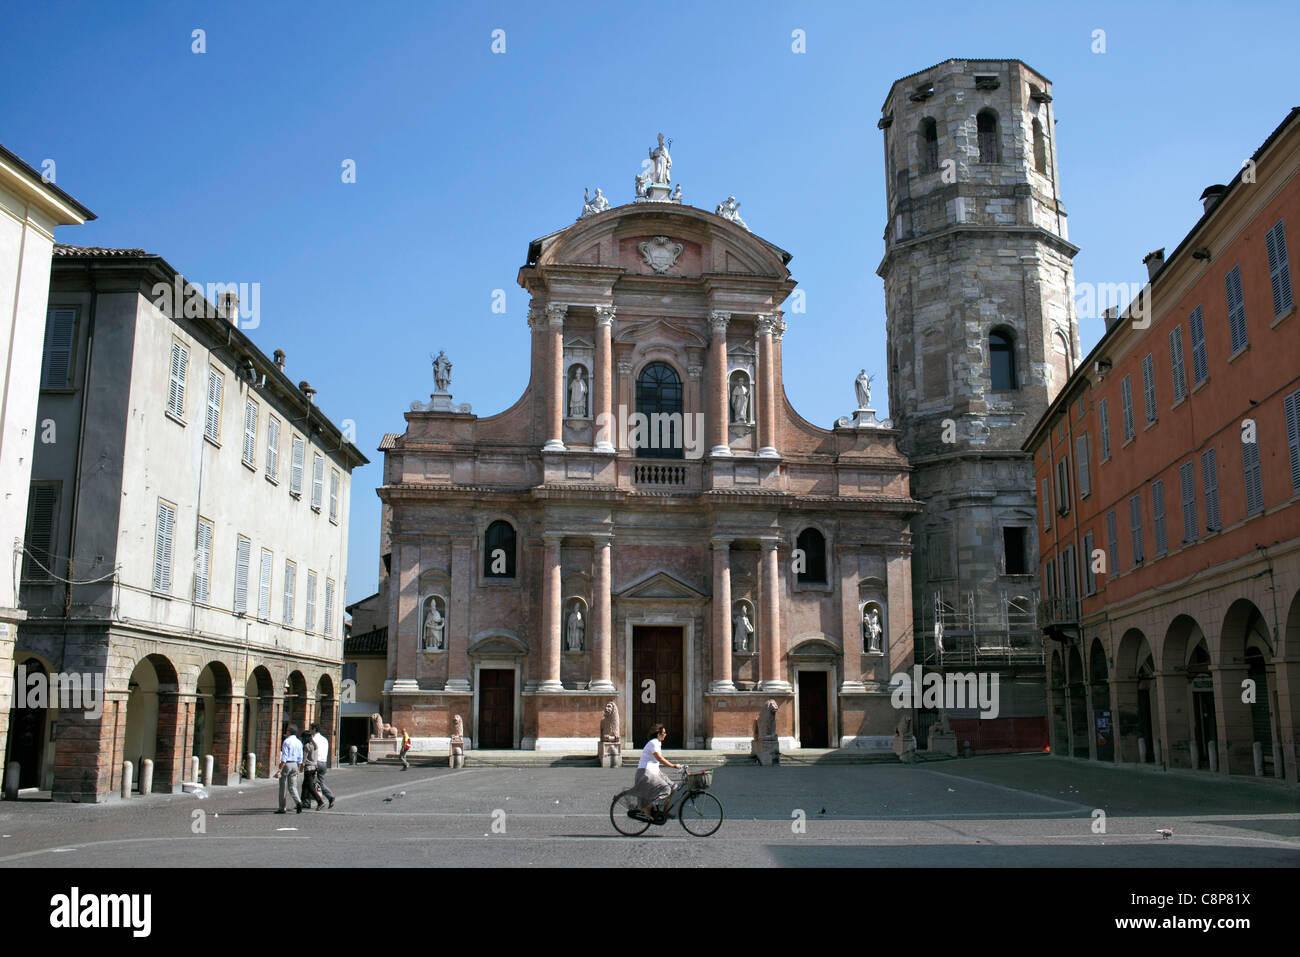 Die Basilica di San Prospero in der Piazza San Prospero, Reggio Emilia, Italien. Stockfoto